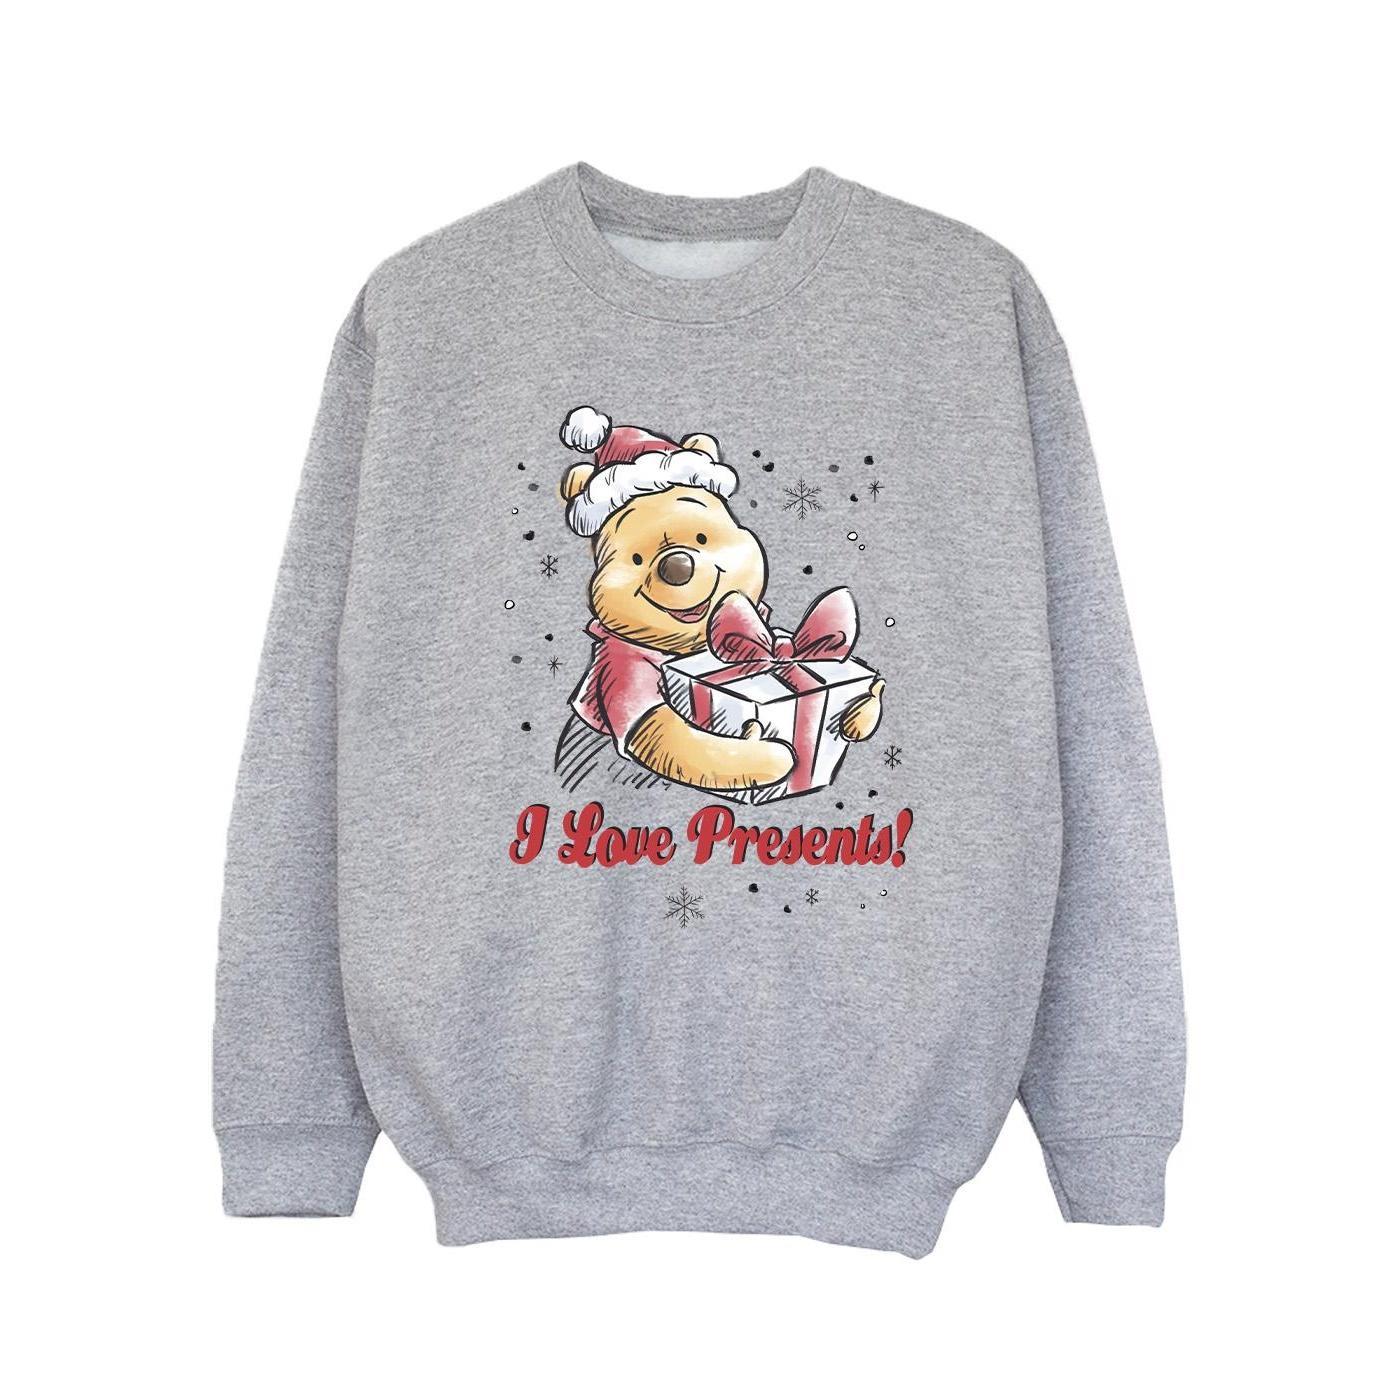 Disney Girls Winnie The Pooh Love Presents Sweatshirt (Sports Grey) (5-6 Years)